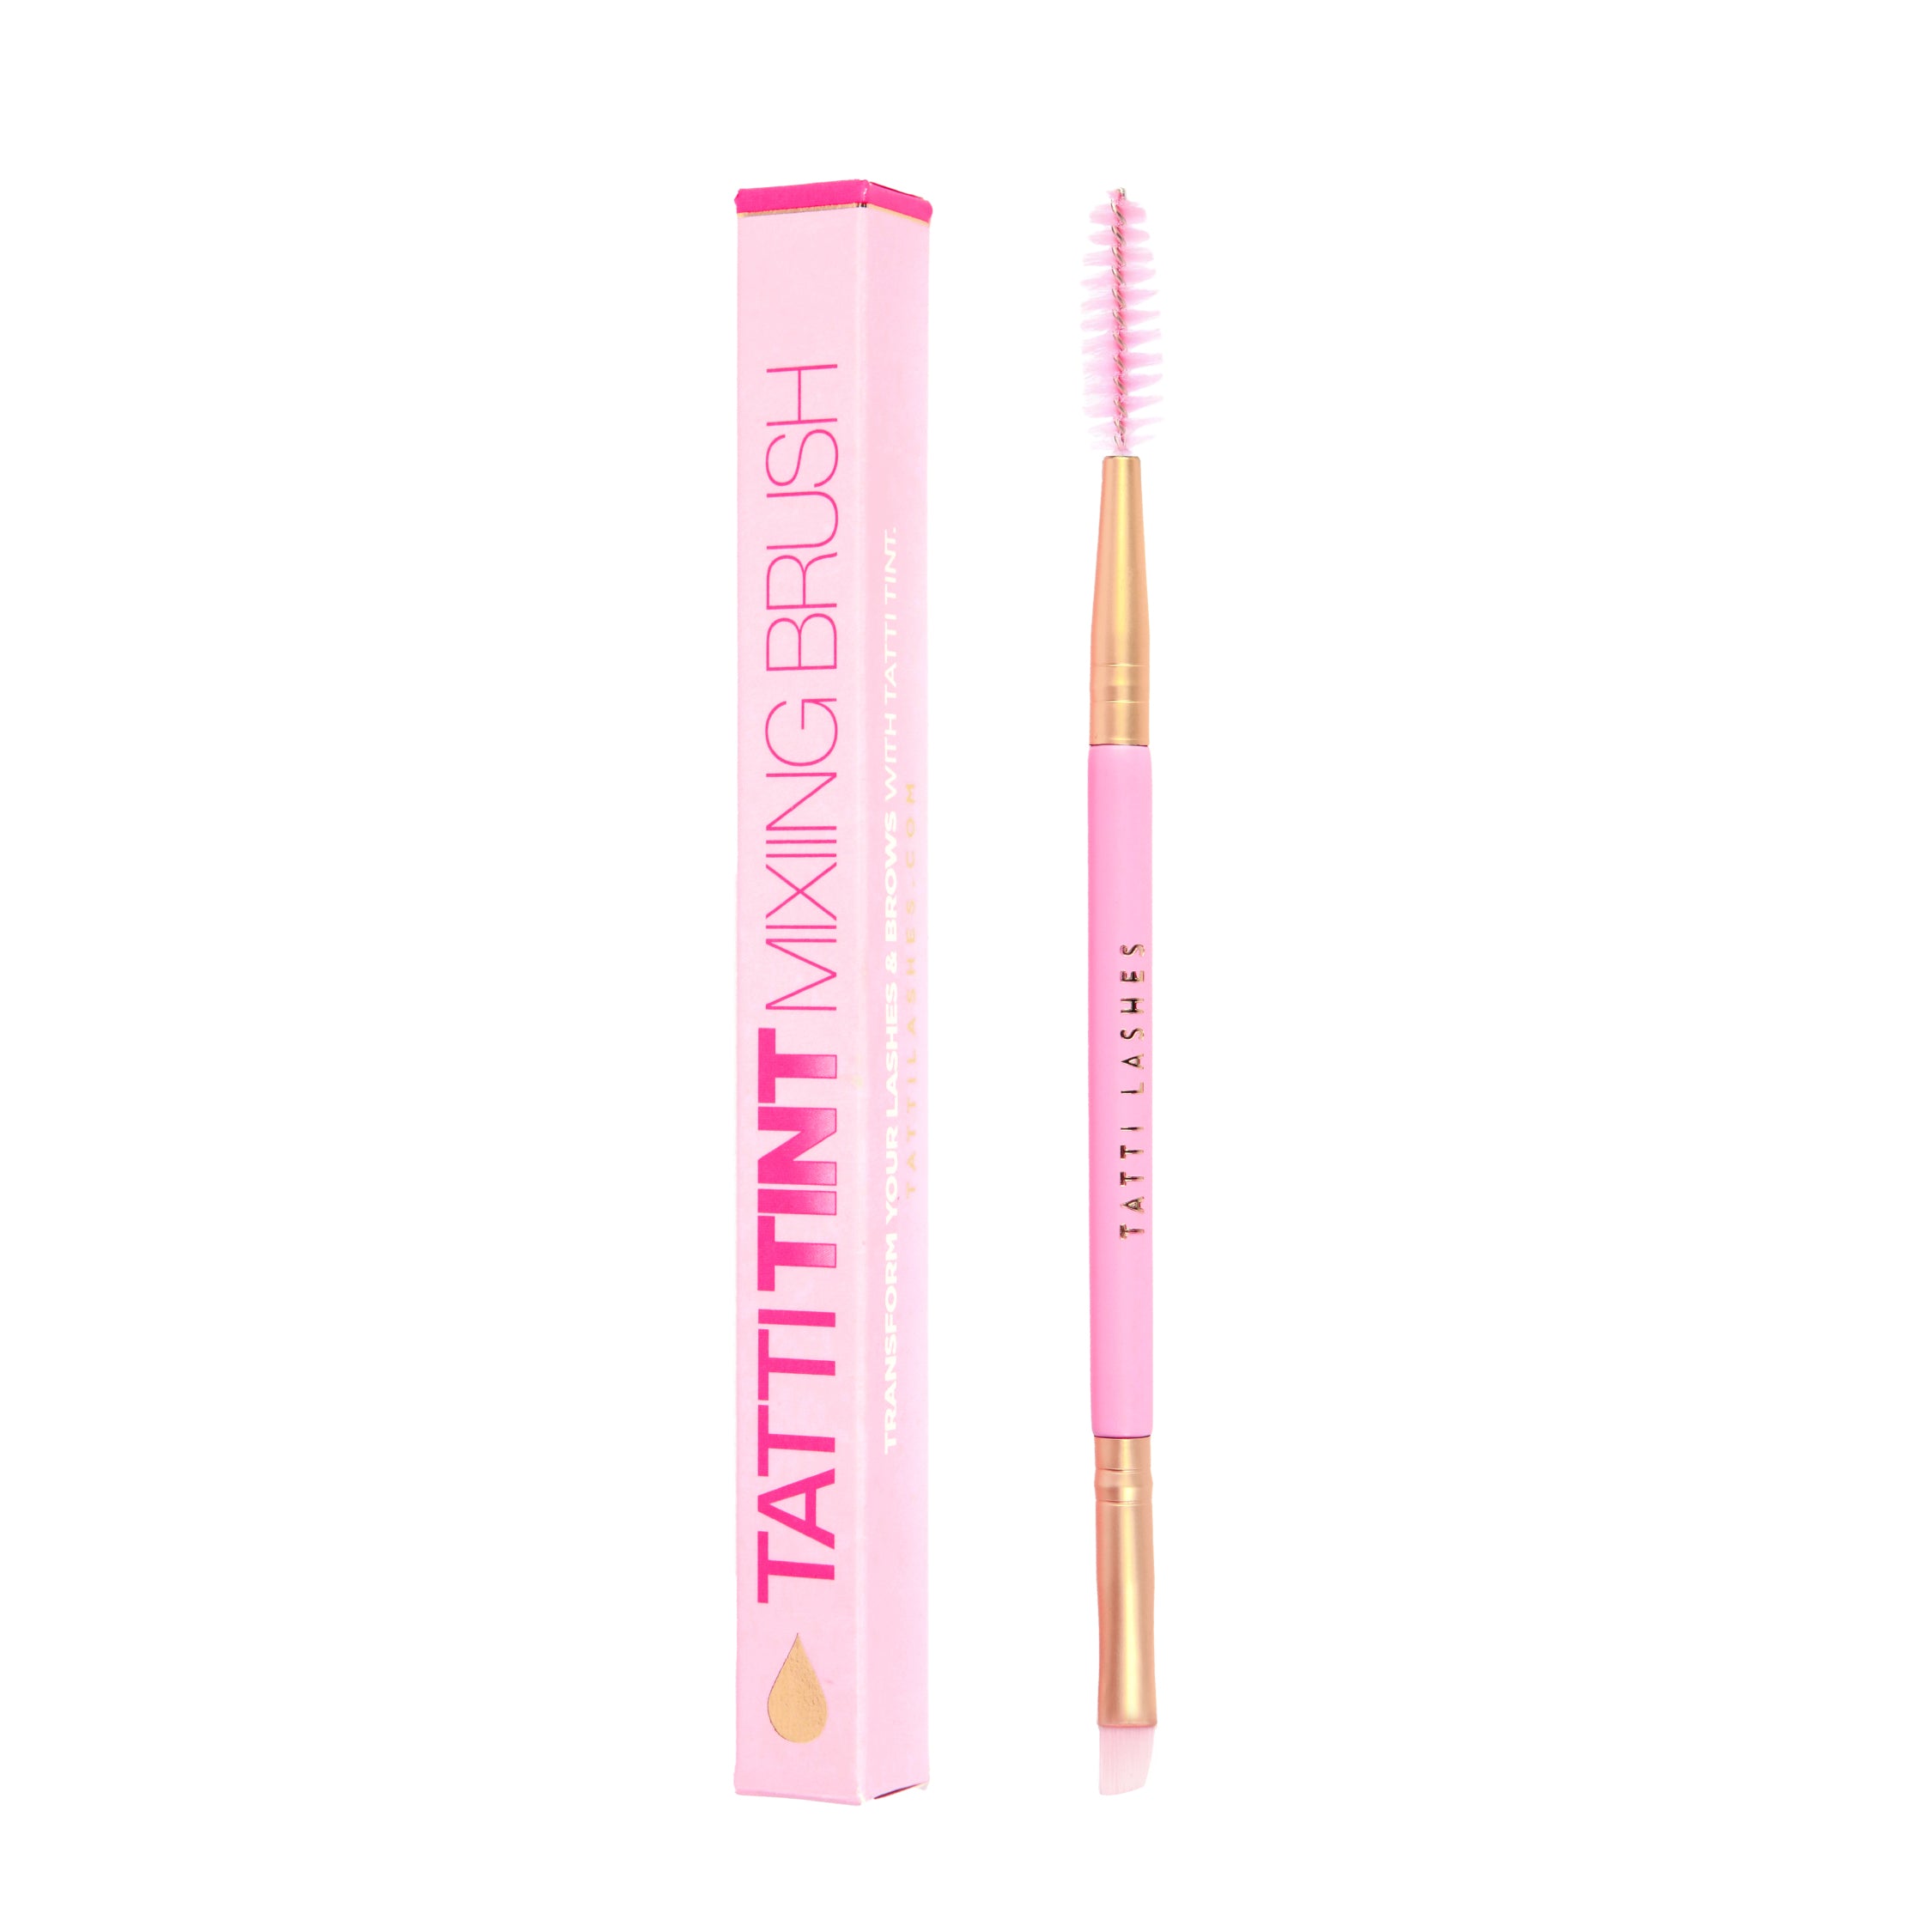 Pink Tatti Tint Mixing Brush